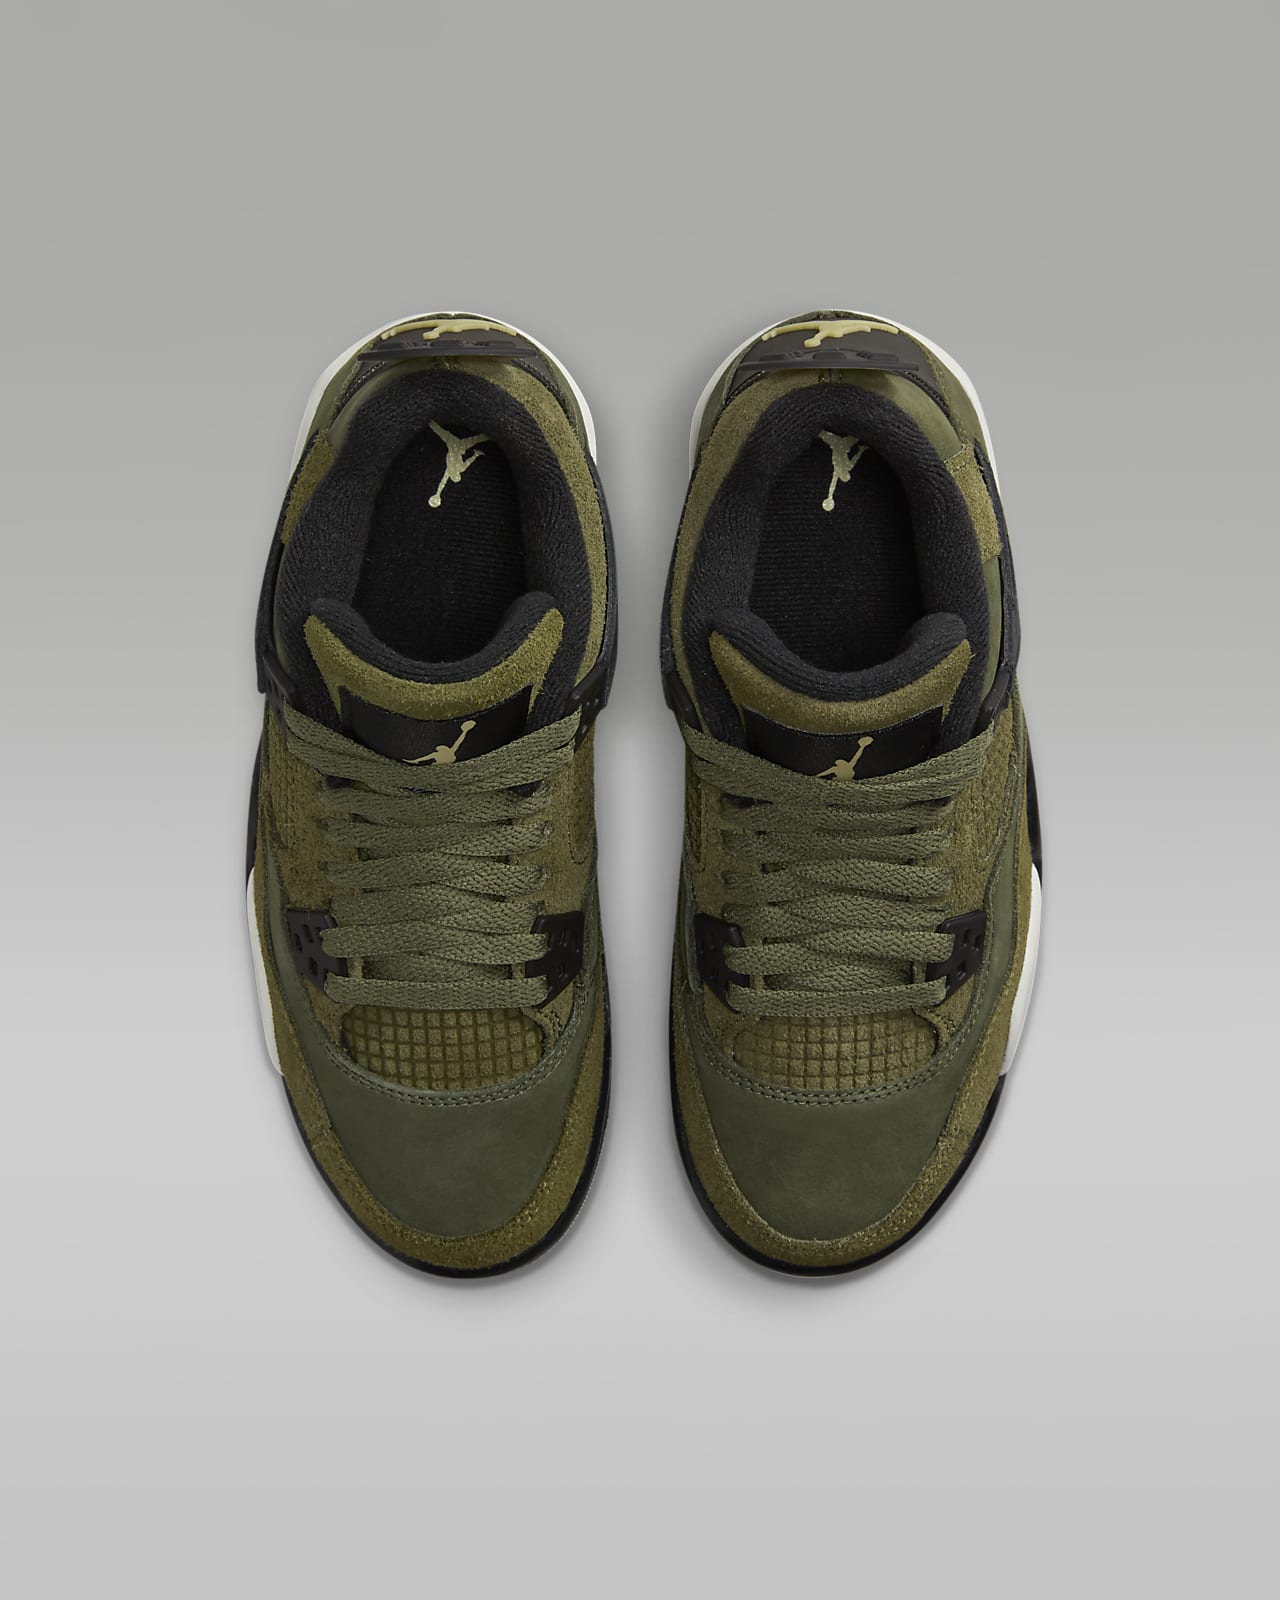 Air Jordan 4 Medium Olive: A Fresh Craft Series Entry